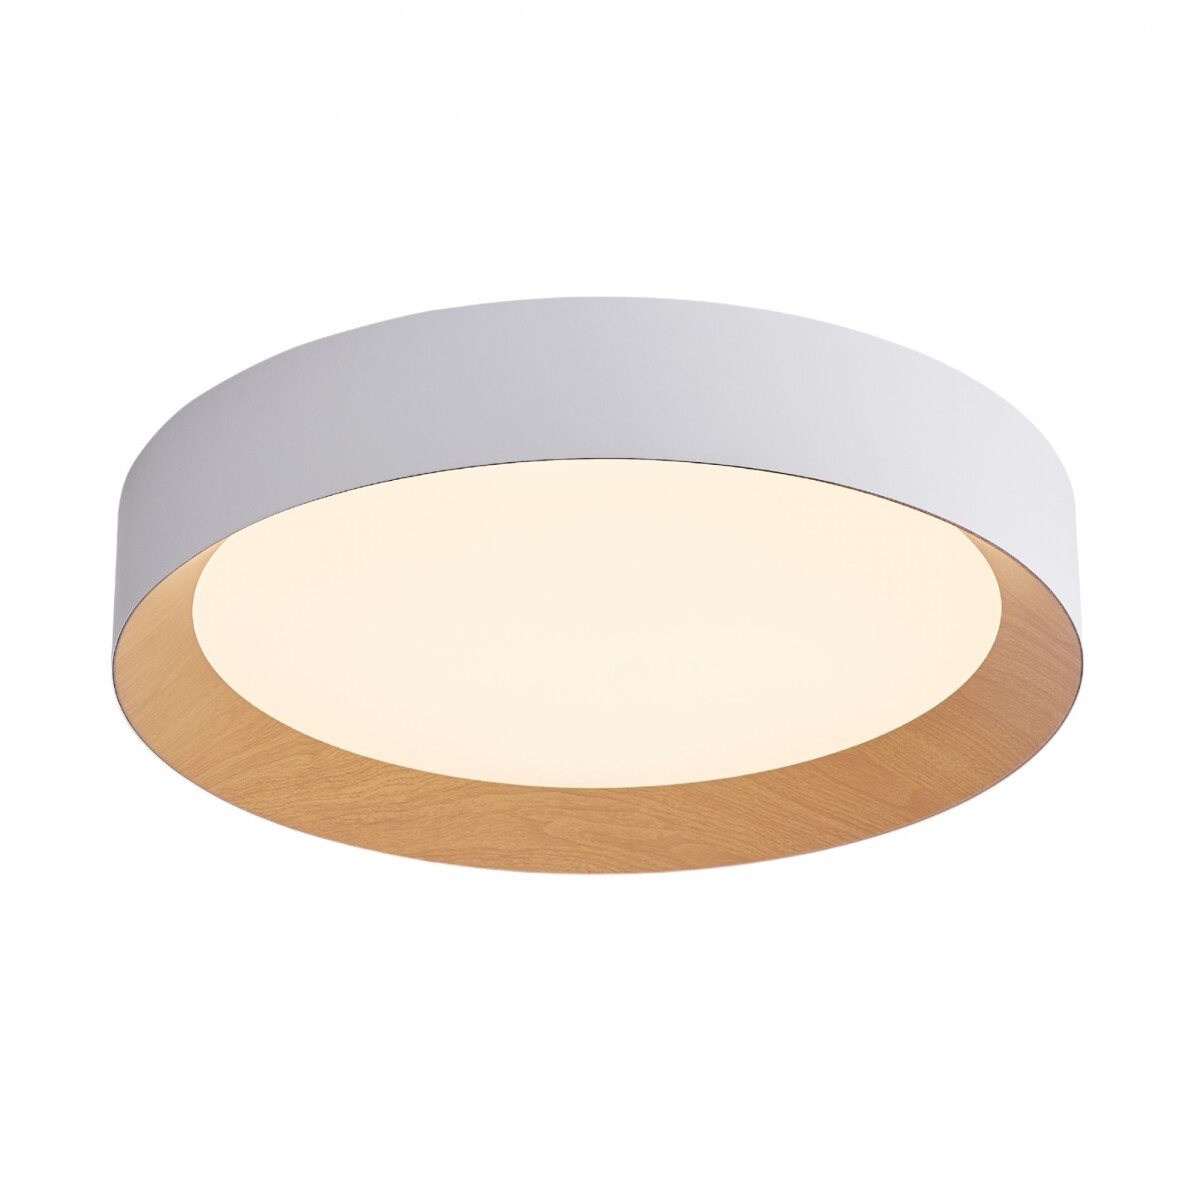 Luminaria led Diseño circular con Símil madera 40W Dimerizable, 45cm 